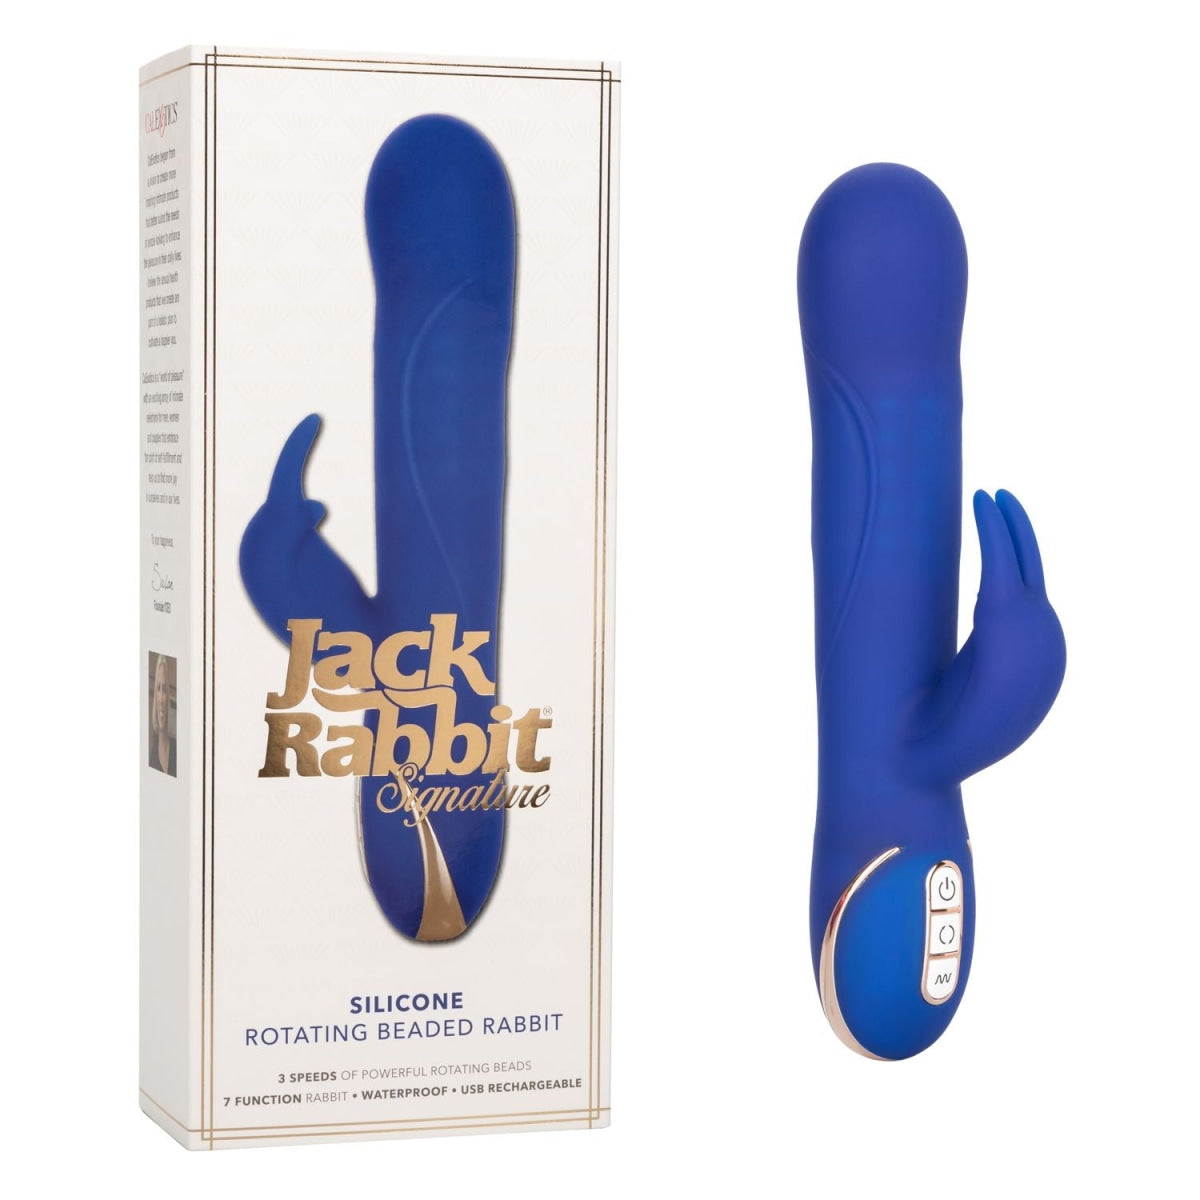 Jack Rabbit Signature Silicone Rotating Beaded Rabbit Intimates Adult Boutique